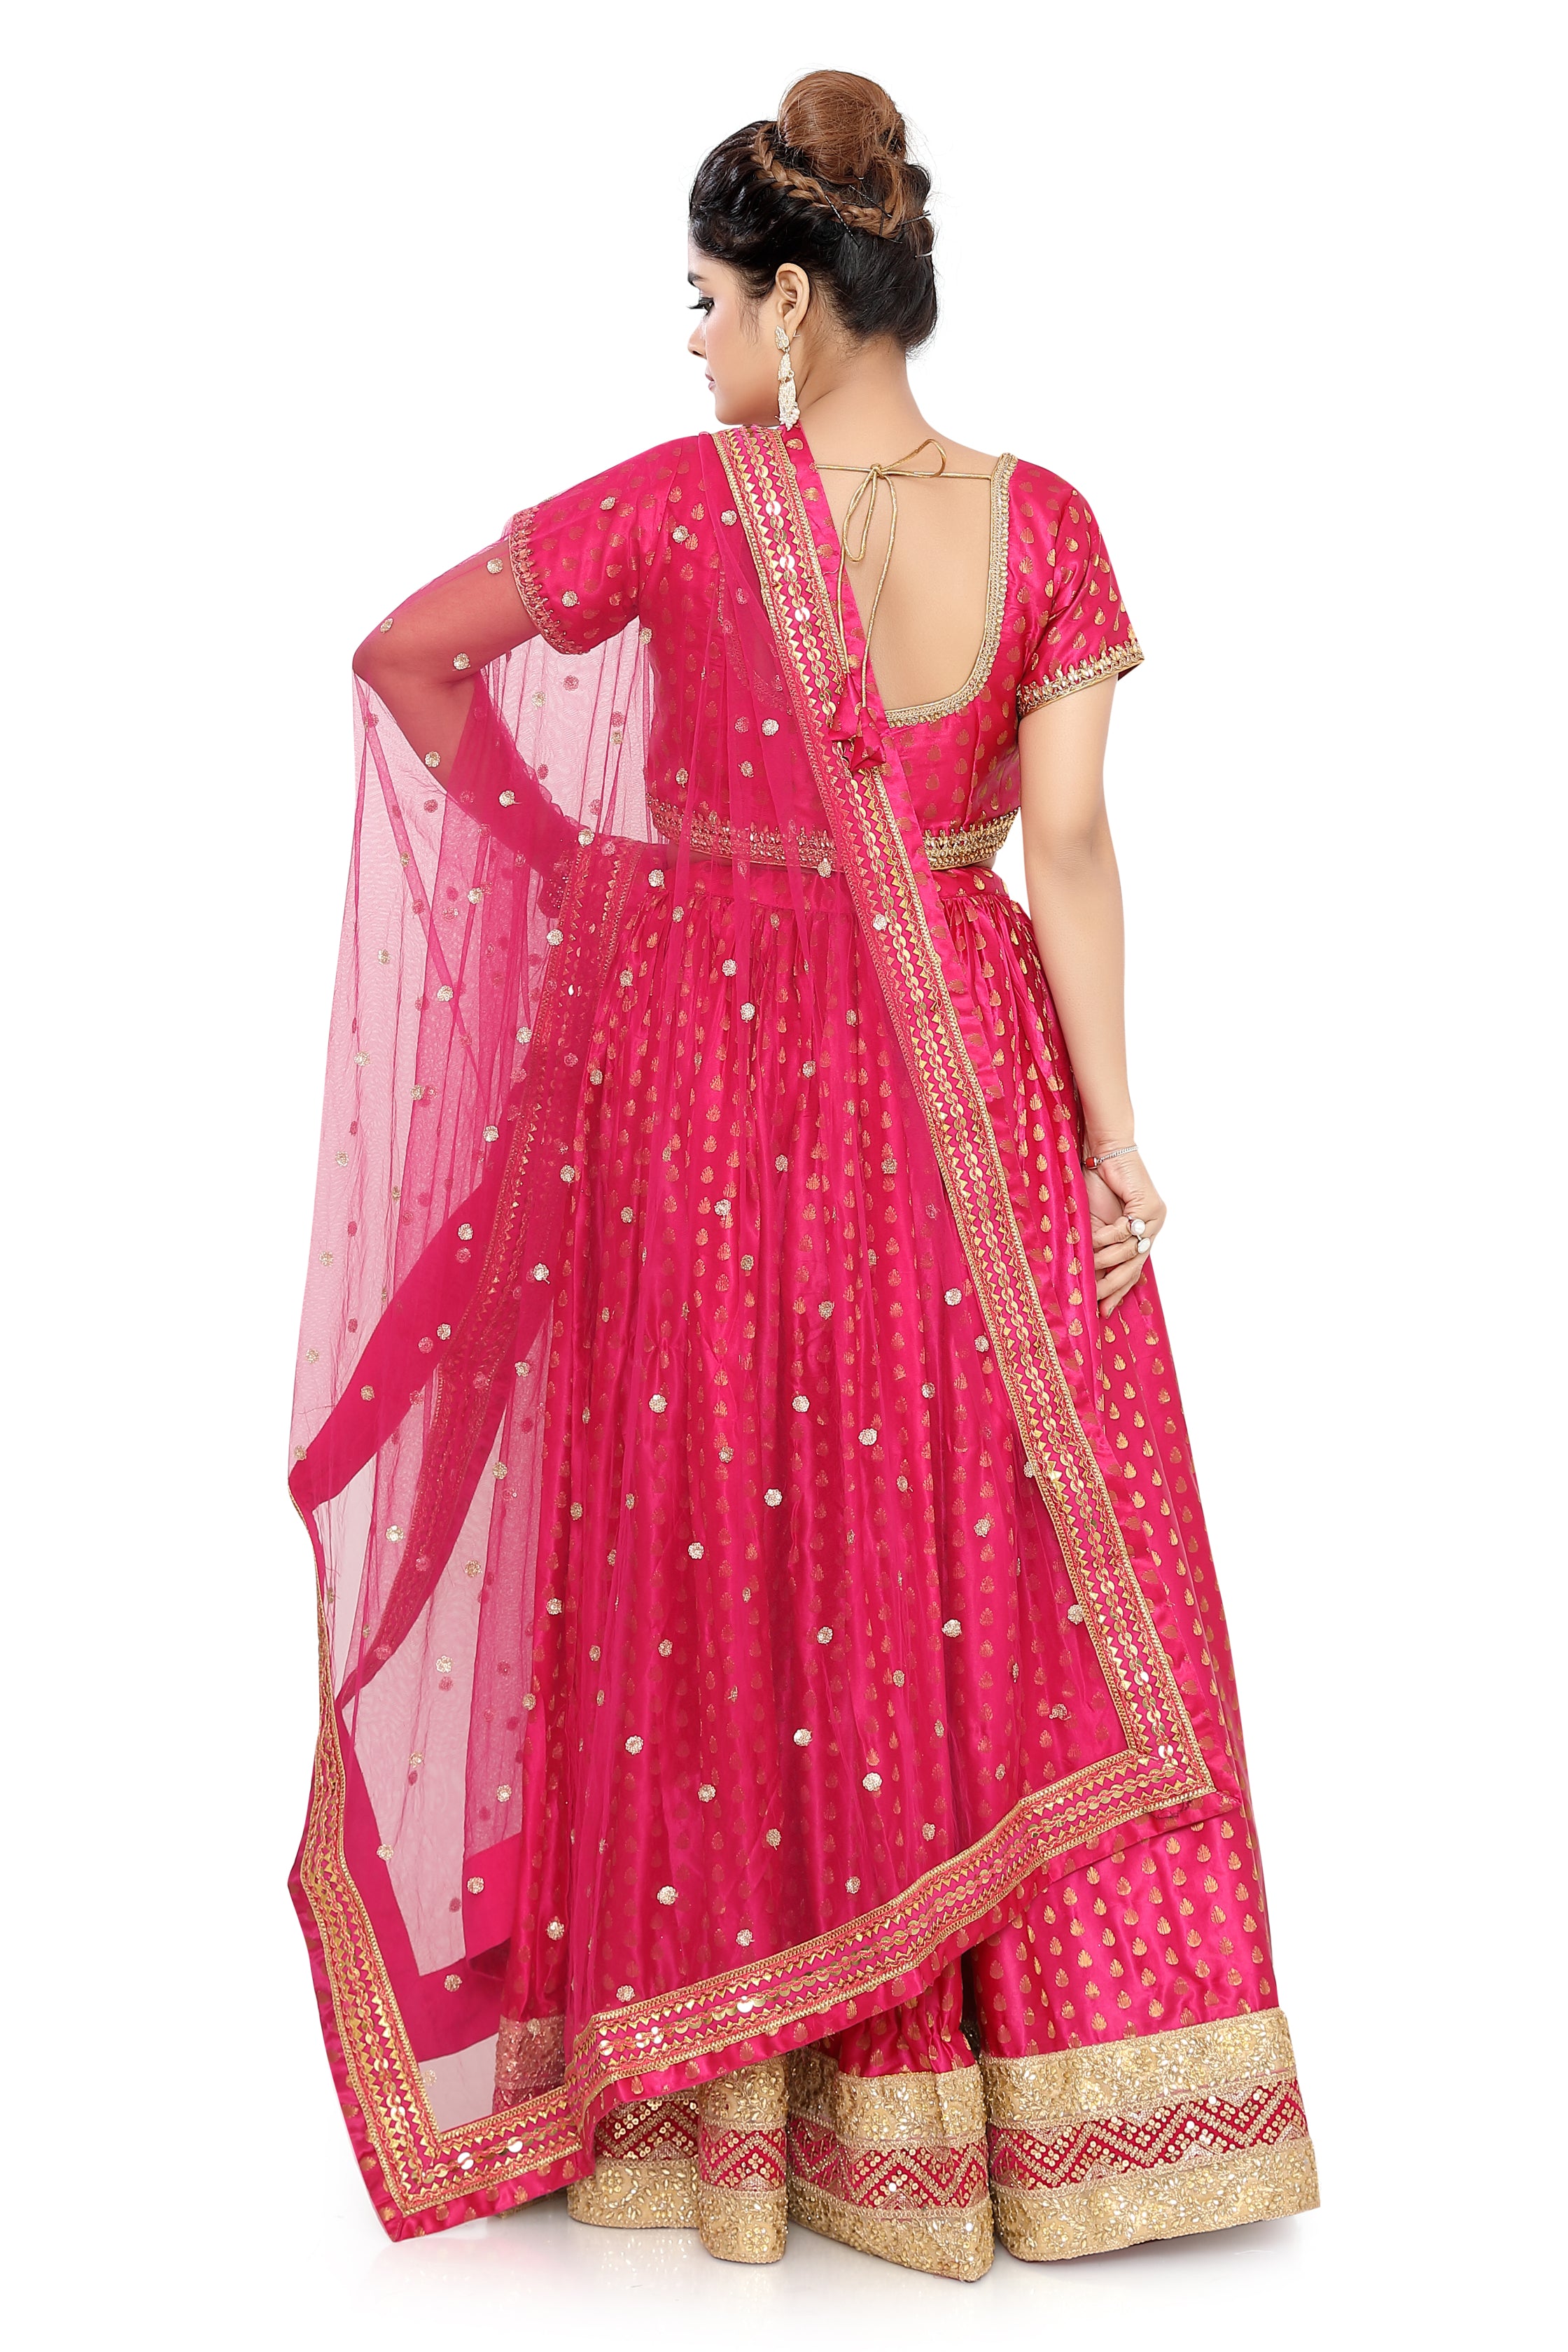 Pink Silk Lehenga Choli - Premium Partywear Lehenga from Dulhan Exclusives - Just $195! Shop now at Dulhan Exclusives